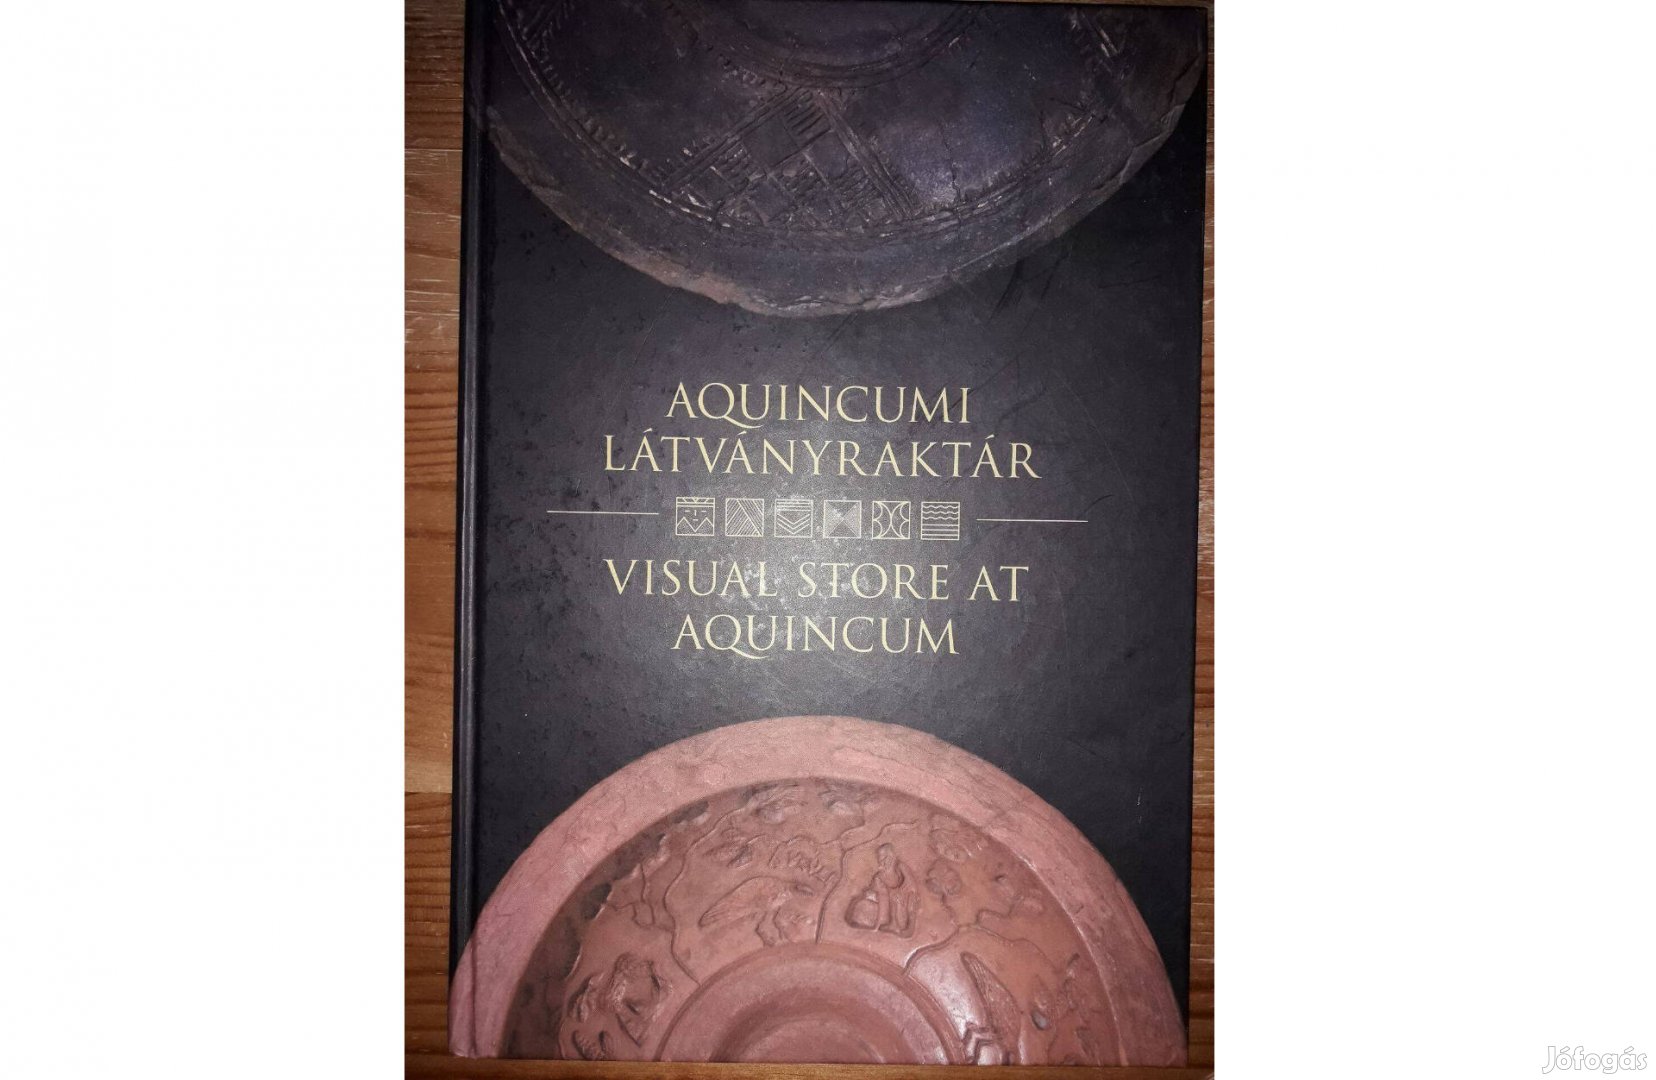 Aquincumi látványraktár Visuae Store at Aquincum